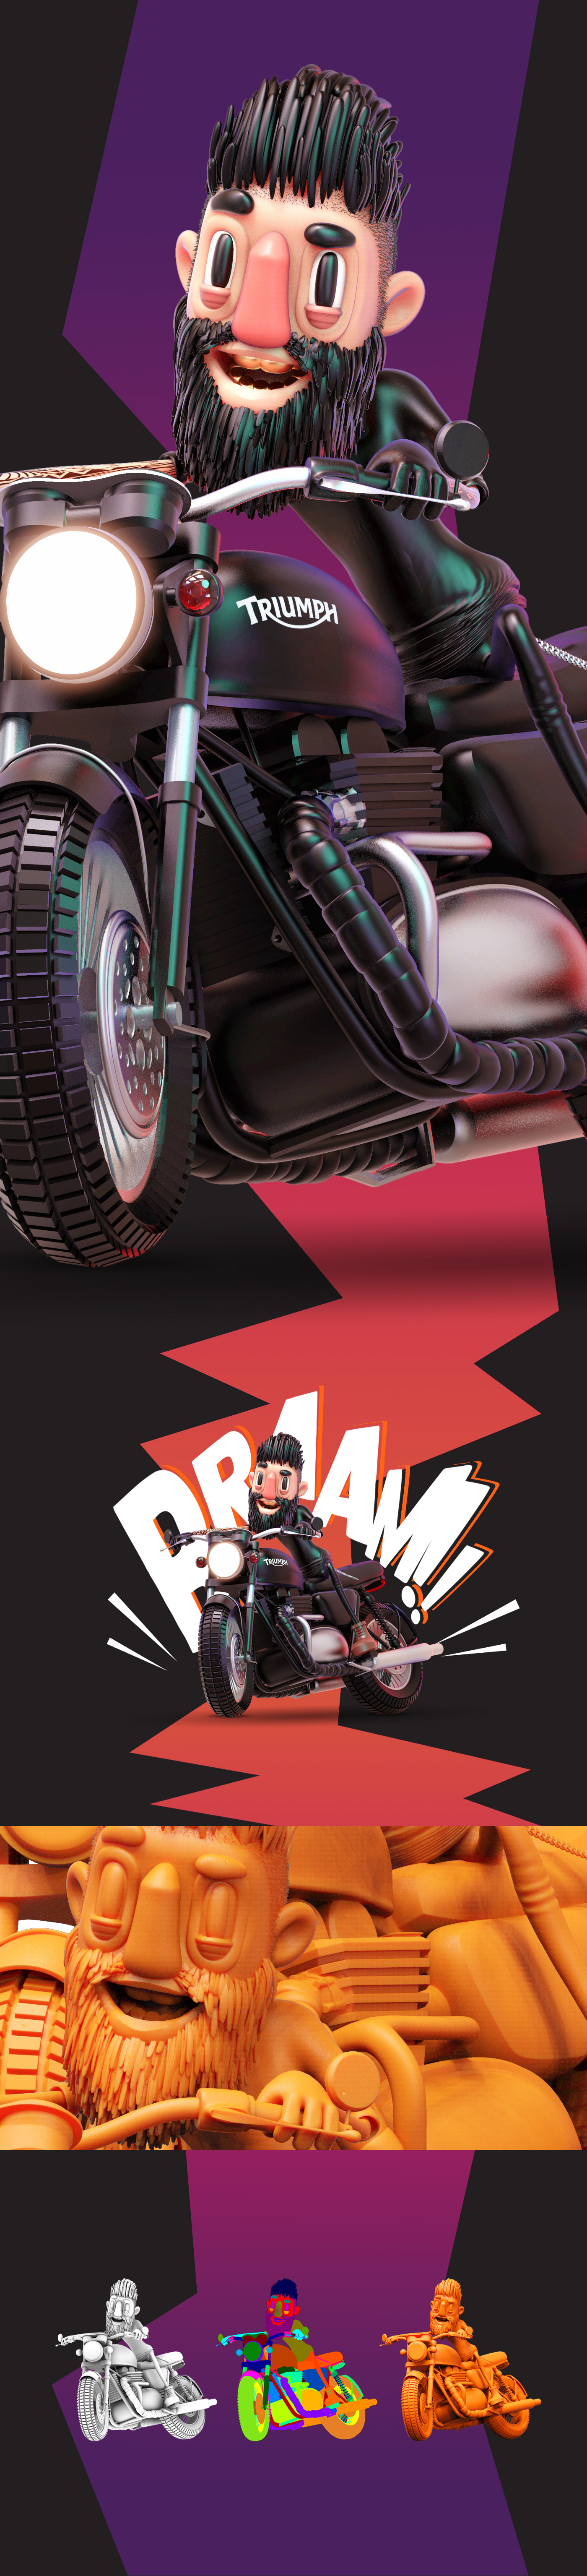 3dcharacter 3dcharacterdesign art characterdesign design ILLUSTRATION  motorcycle Render triumph Zbrush